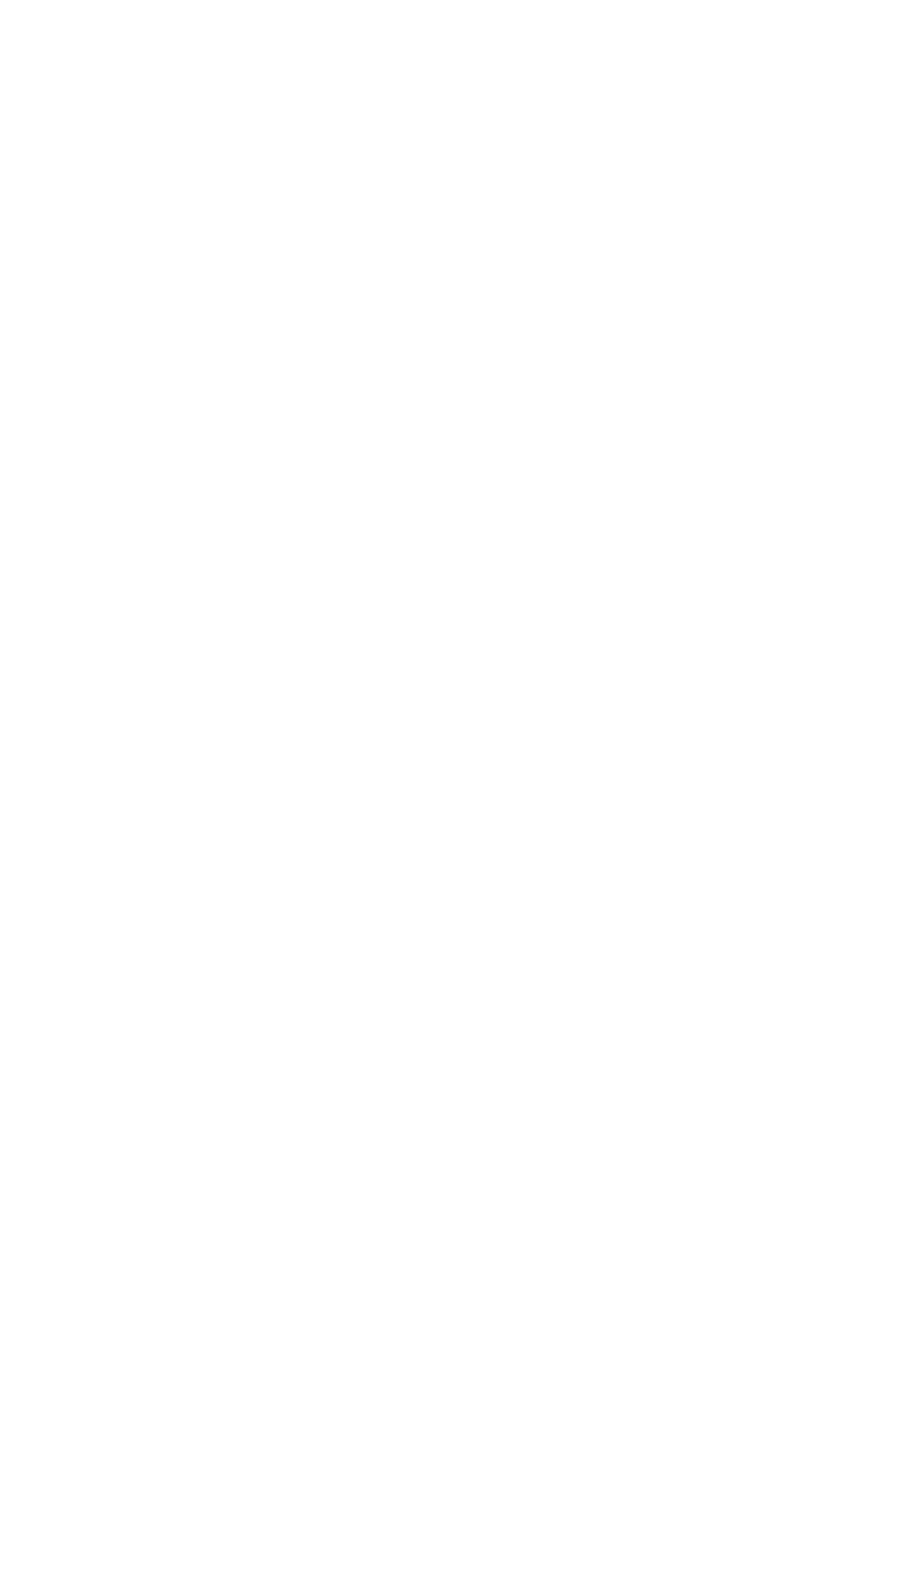 Oatly logo pour fonds sombres (PNG transparent)